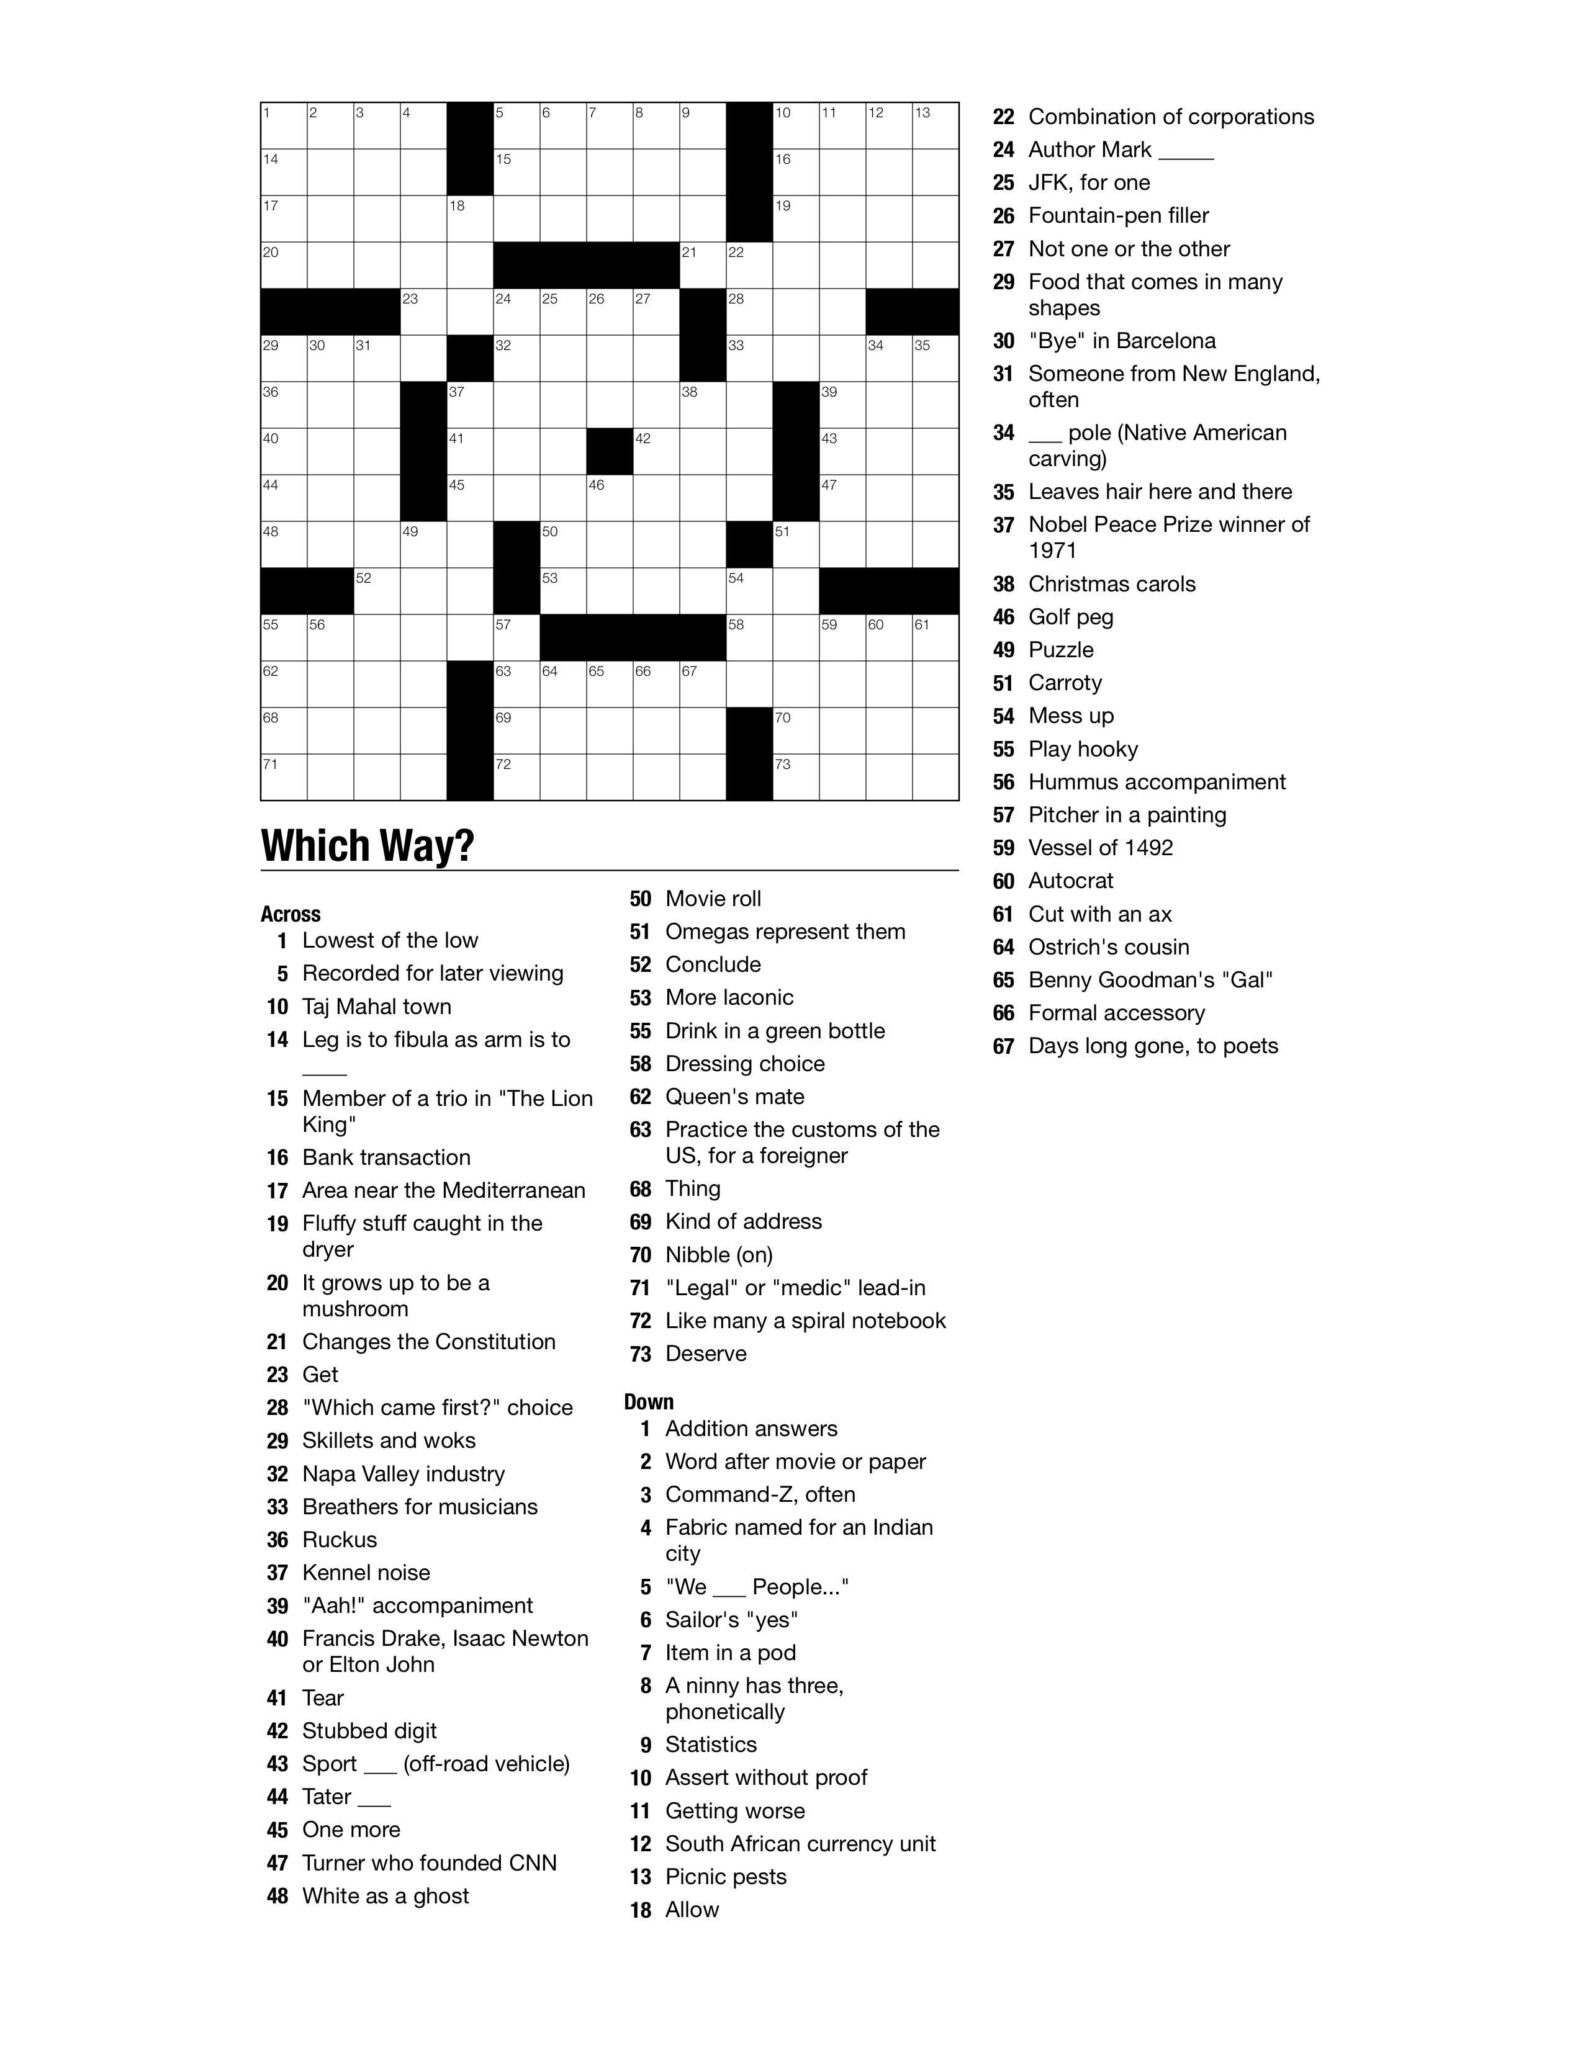 Weekly Themed Crossword BVNWnews Printable Crossword Puzzles Online